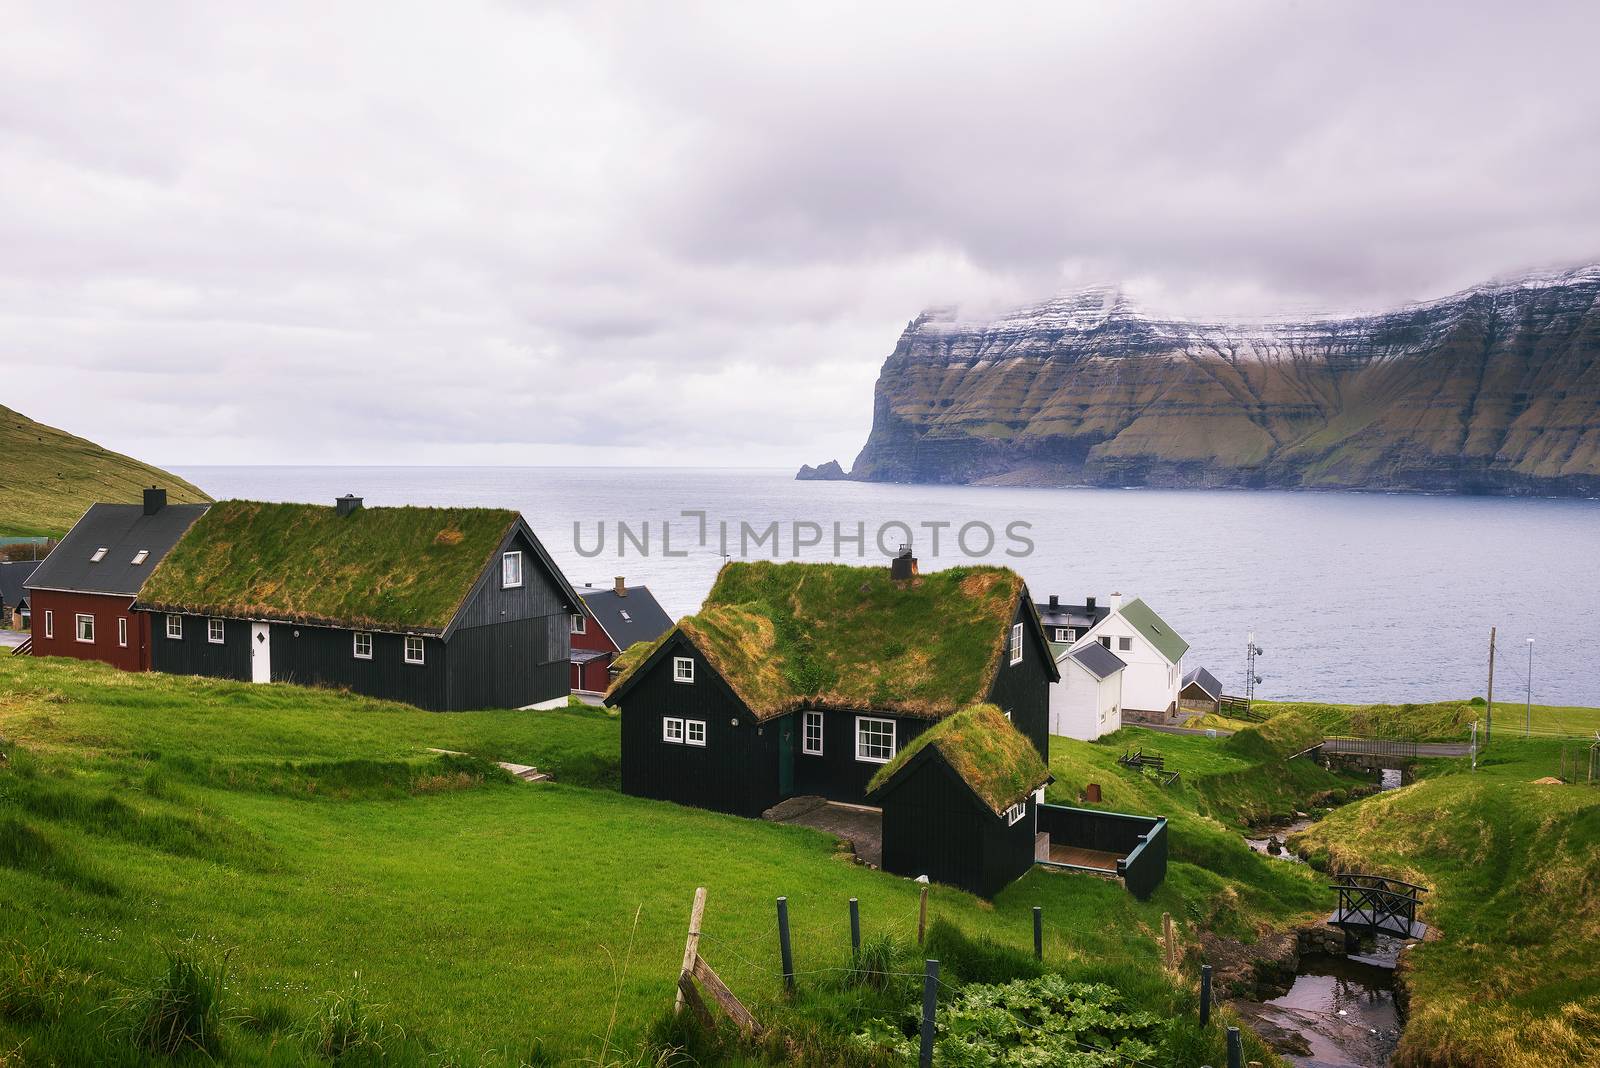 Village of Mikladalur, Faroe Islands, Denmark by nickfox